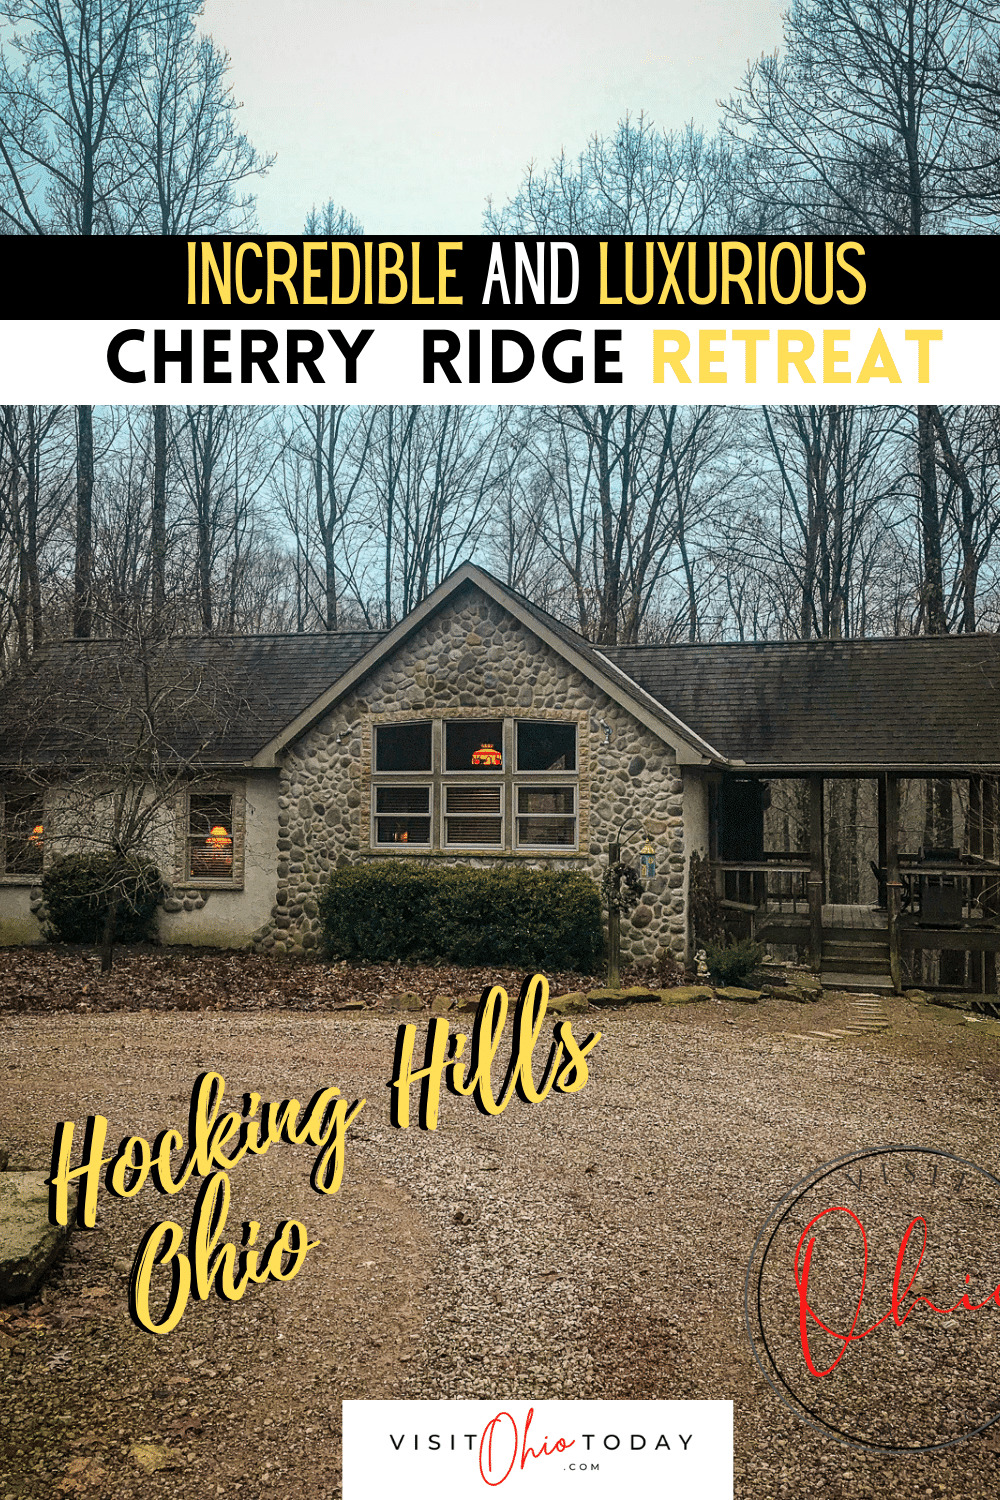 Cherry Ridge Retreat is a luxurious getaway in Hocking Hills. Cherry Ridge Retreat does offer a couple of family friendly cabins.  #cherryridgeretreat #hockinghills #ohio